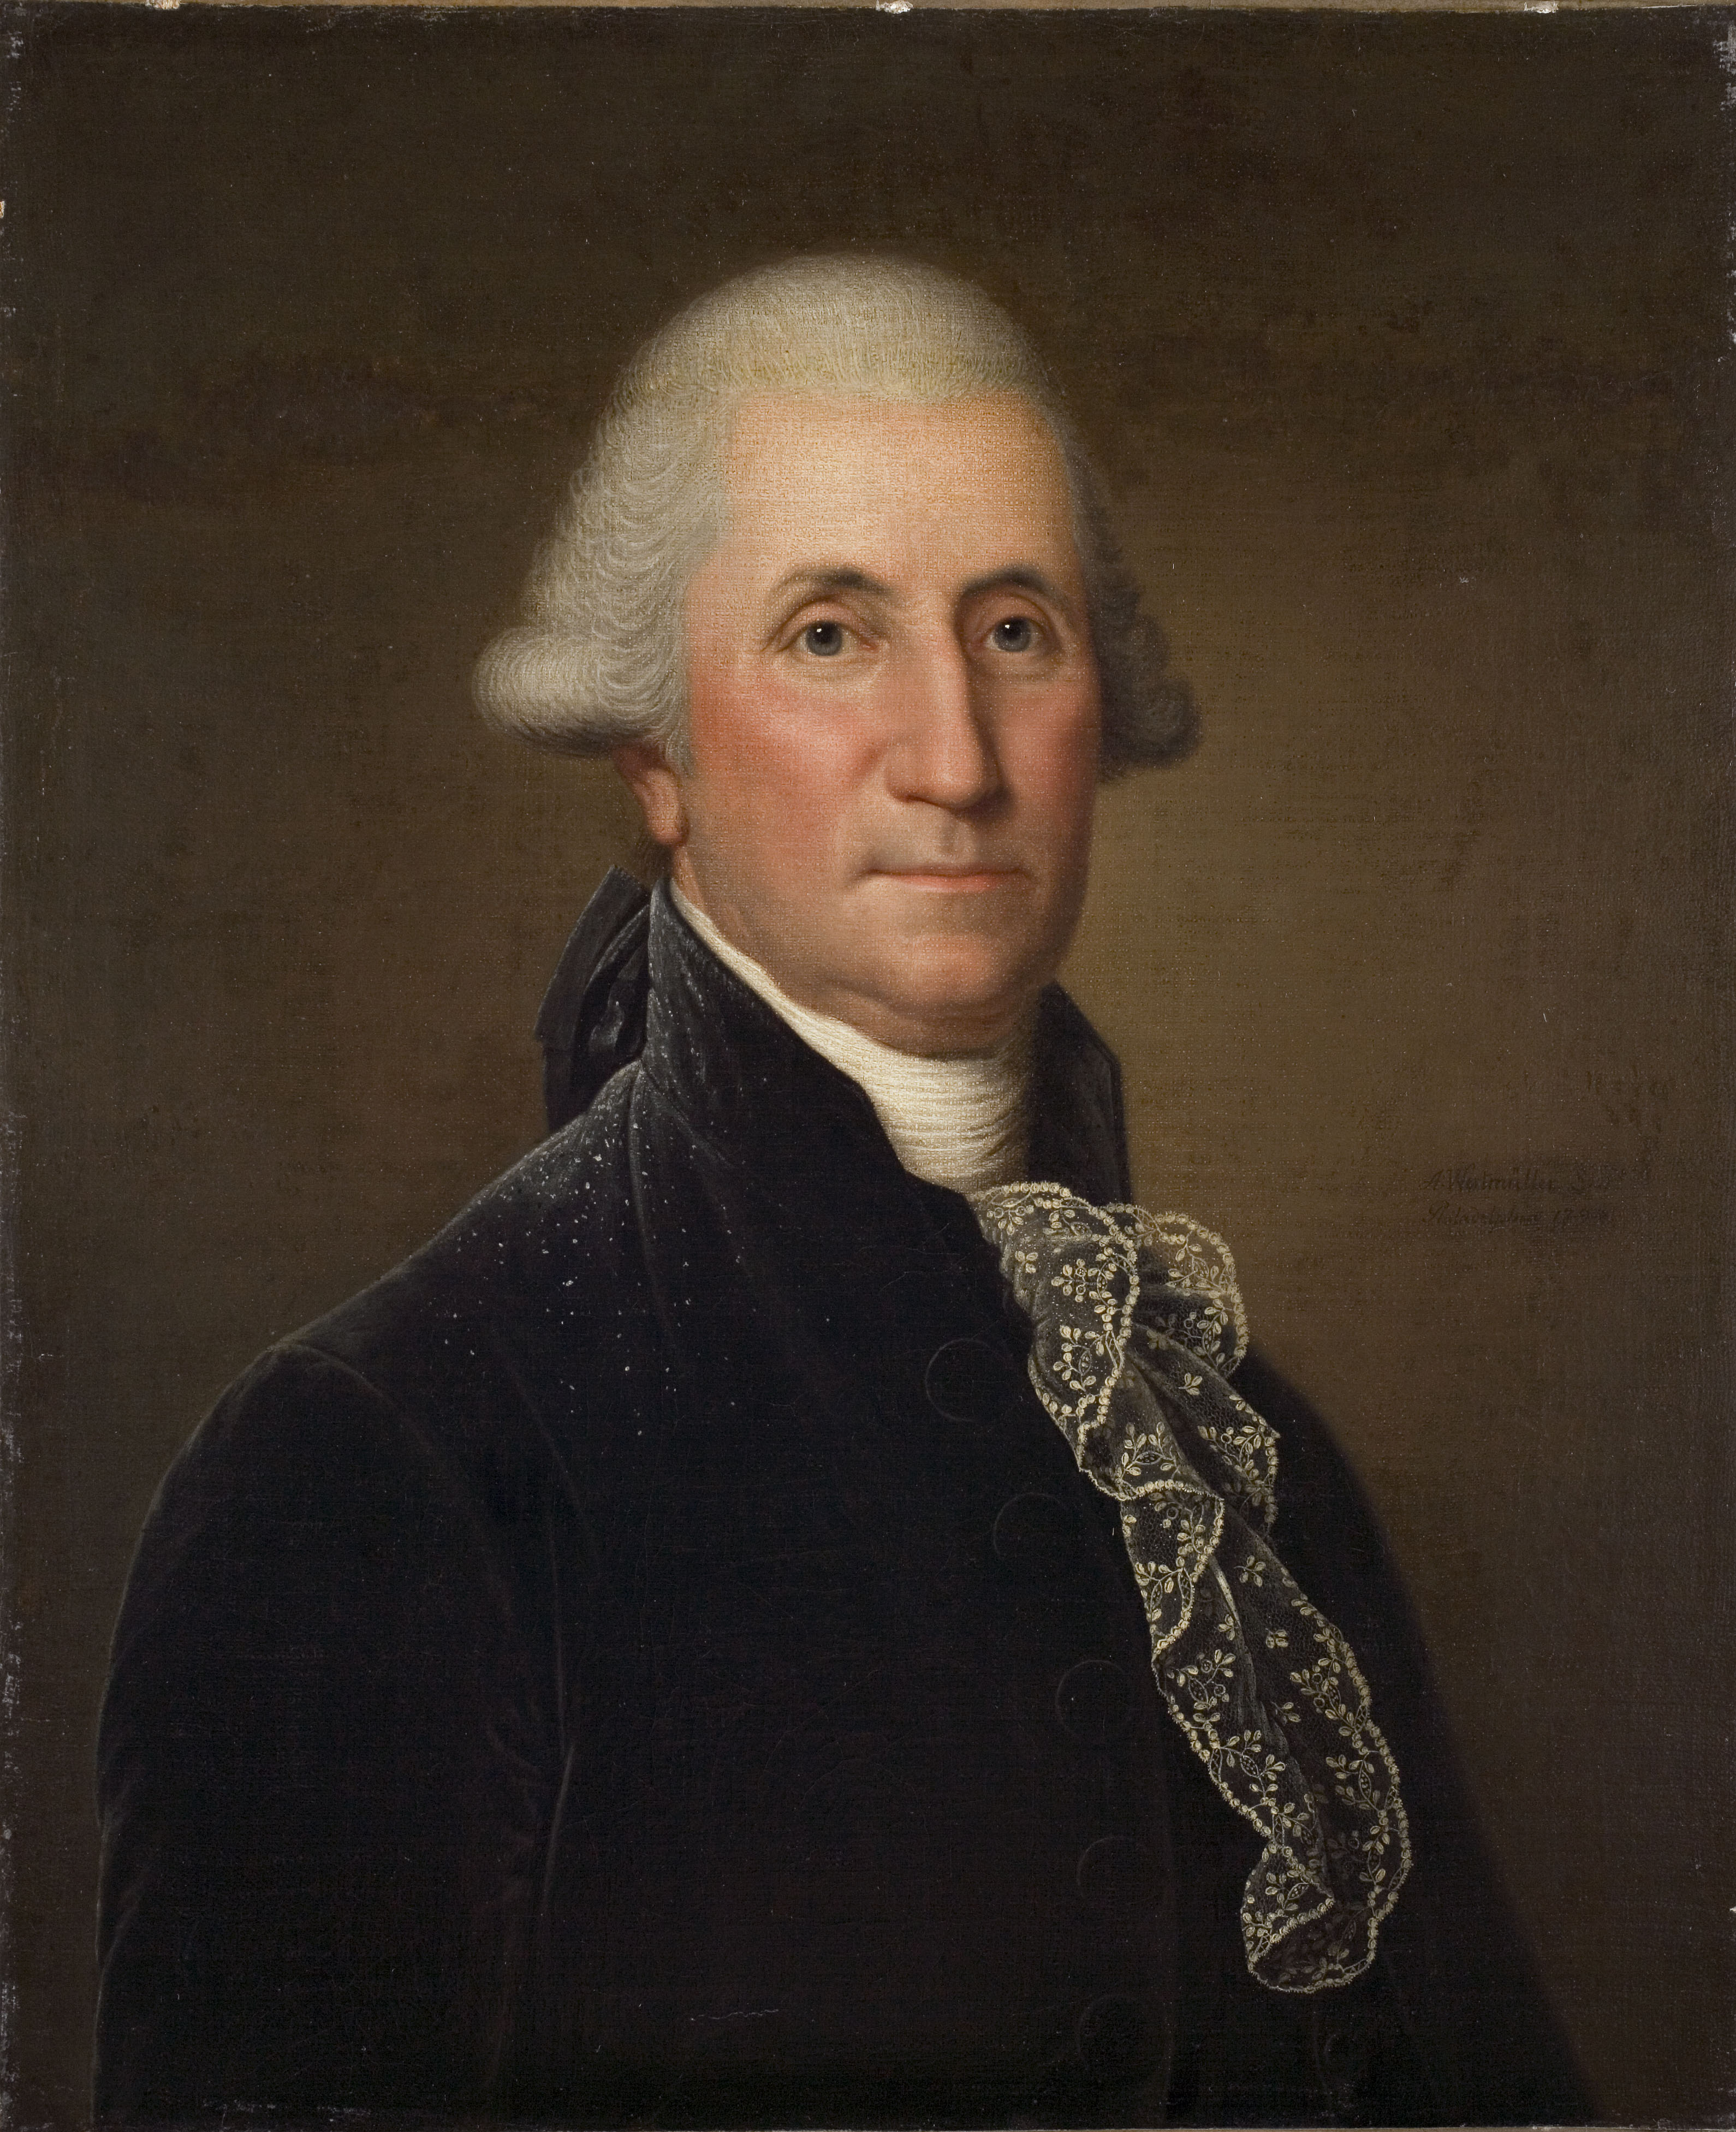 Portrait of George Washington painted by immigrant Adolf Ulrik Wertmüller